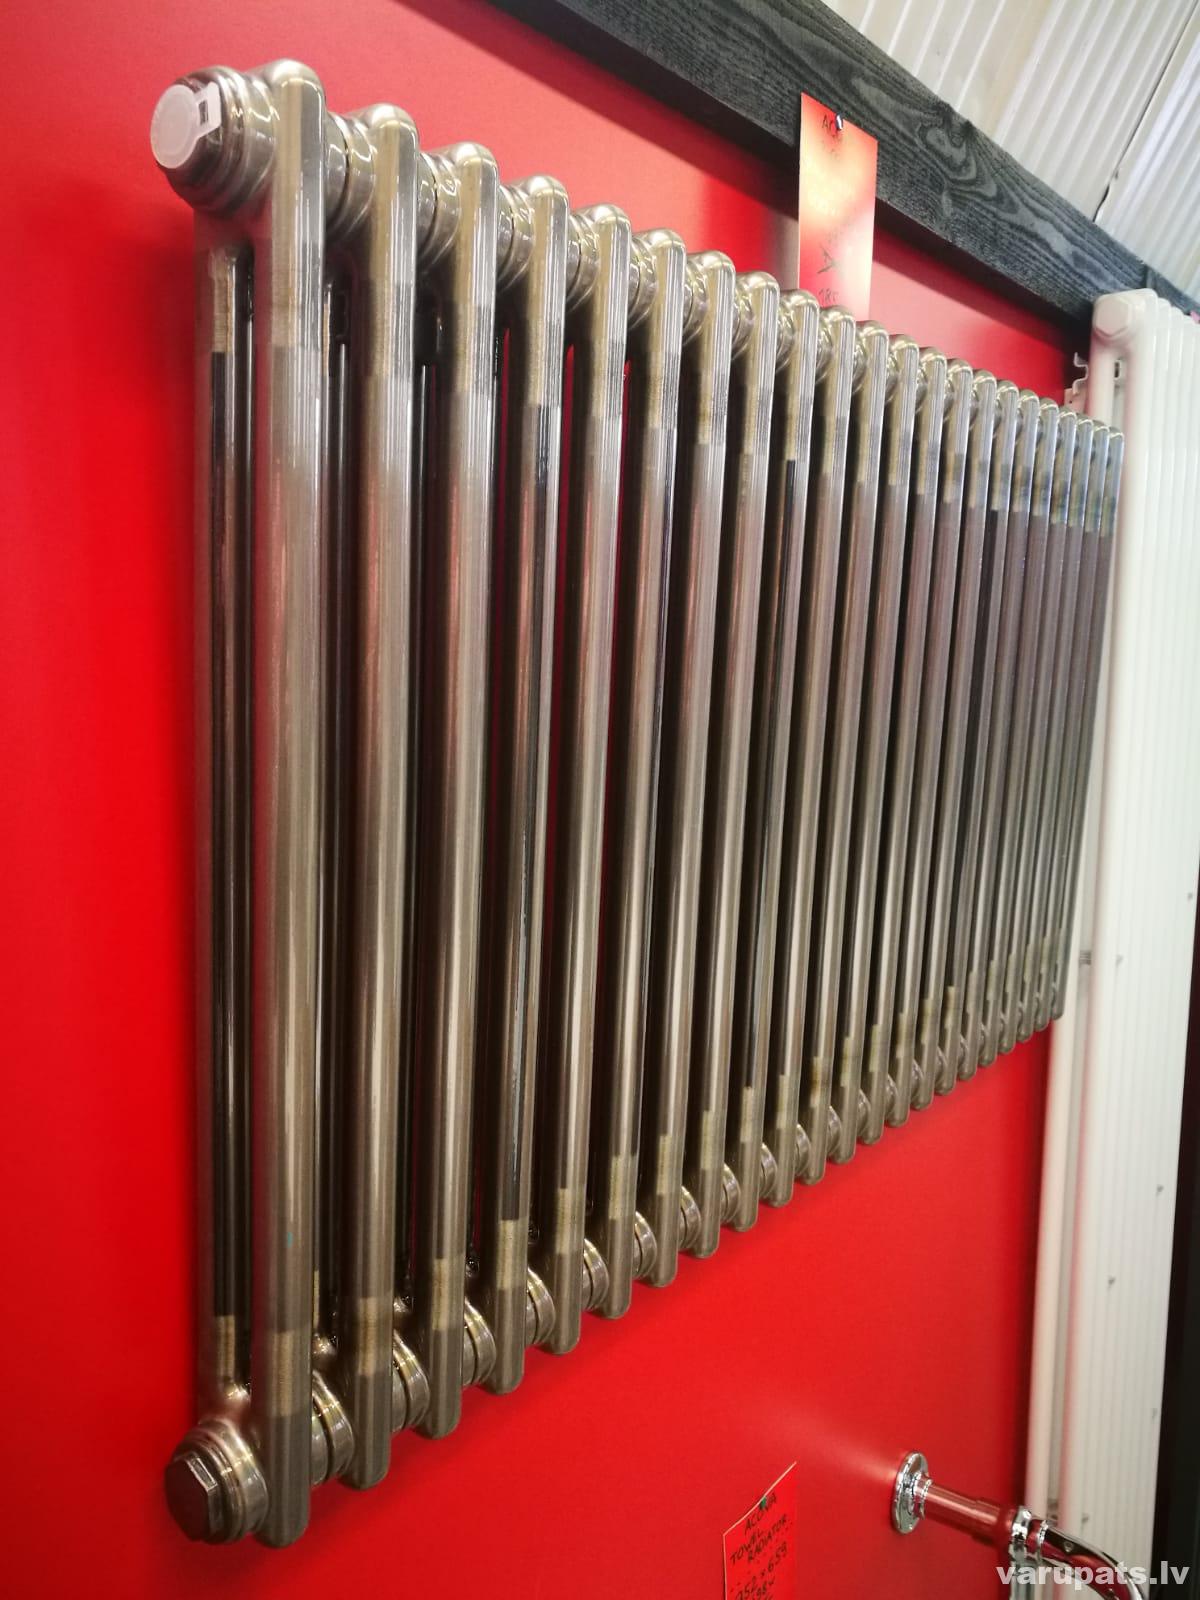 dizaina radiatori, dizaina radiatori kraftlager, radiatori vertikalie, dvielu zavetaji, dizaina radiators, radiators cuguna, radiatros dizaina vertikalais, dizaina radiatori